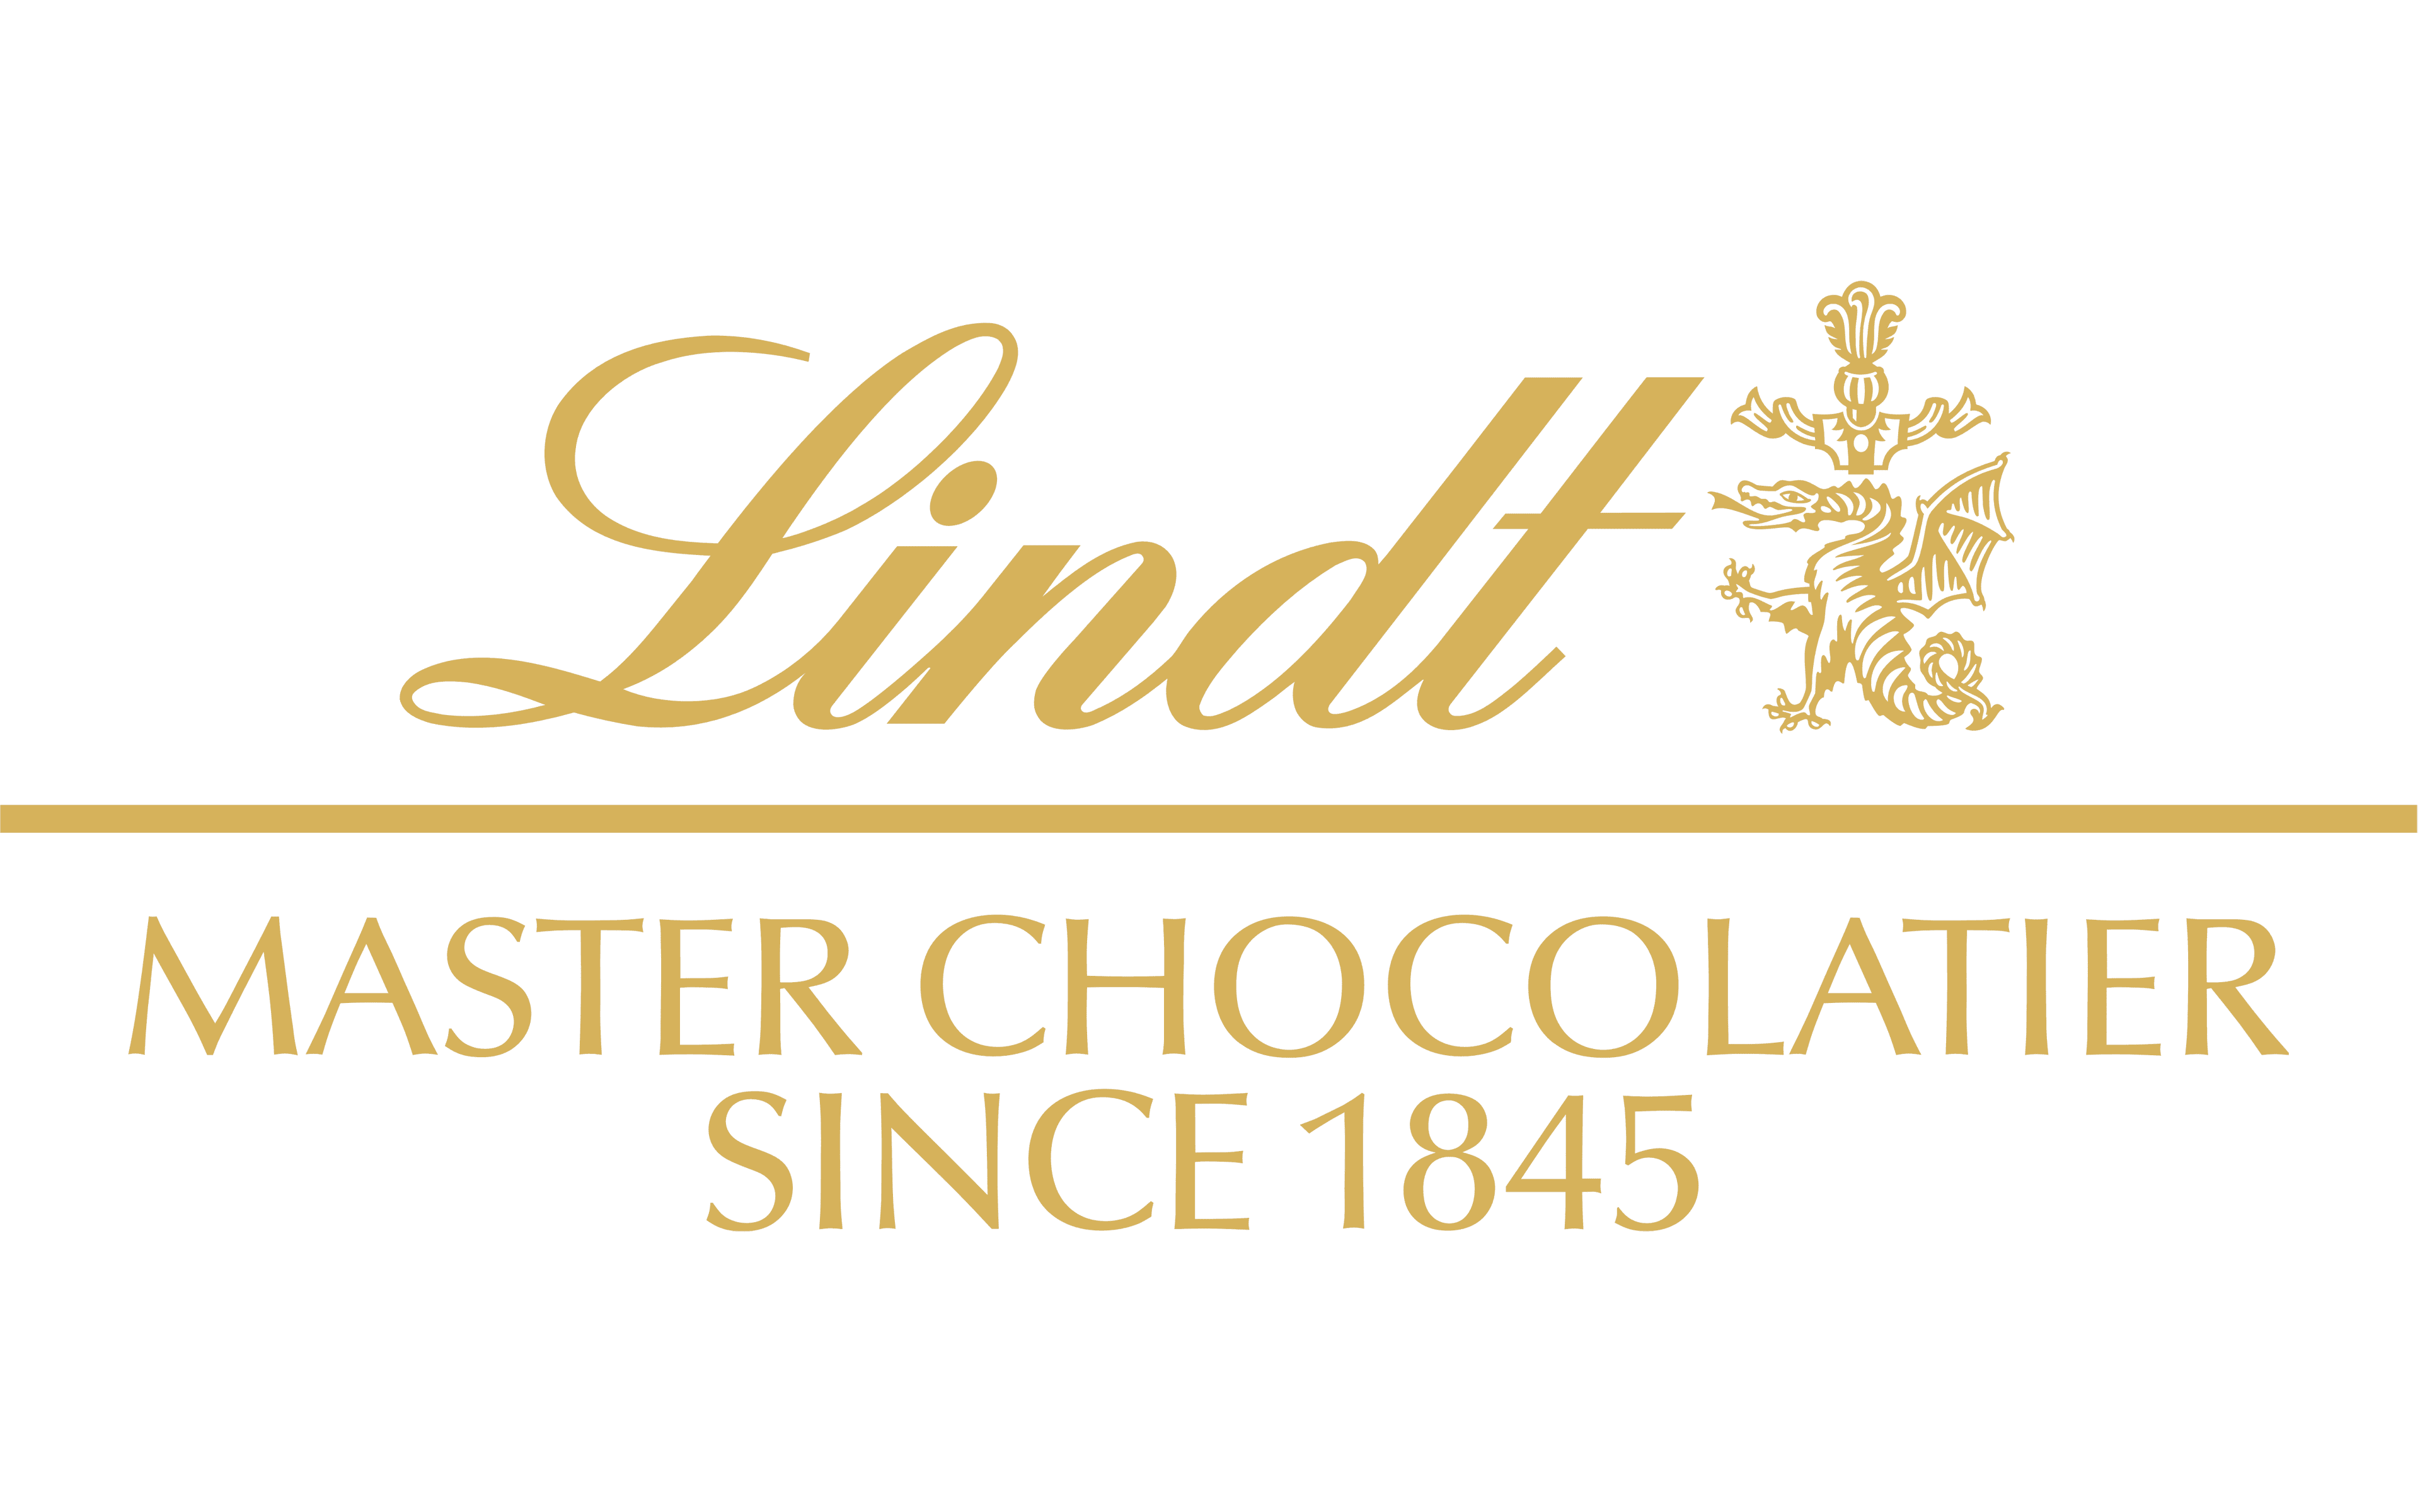 Lindt Sprungli Master Chocolatiers logo for Branded Advent Calendars